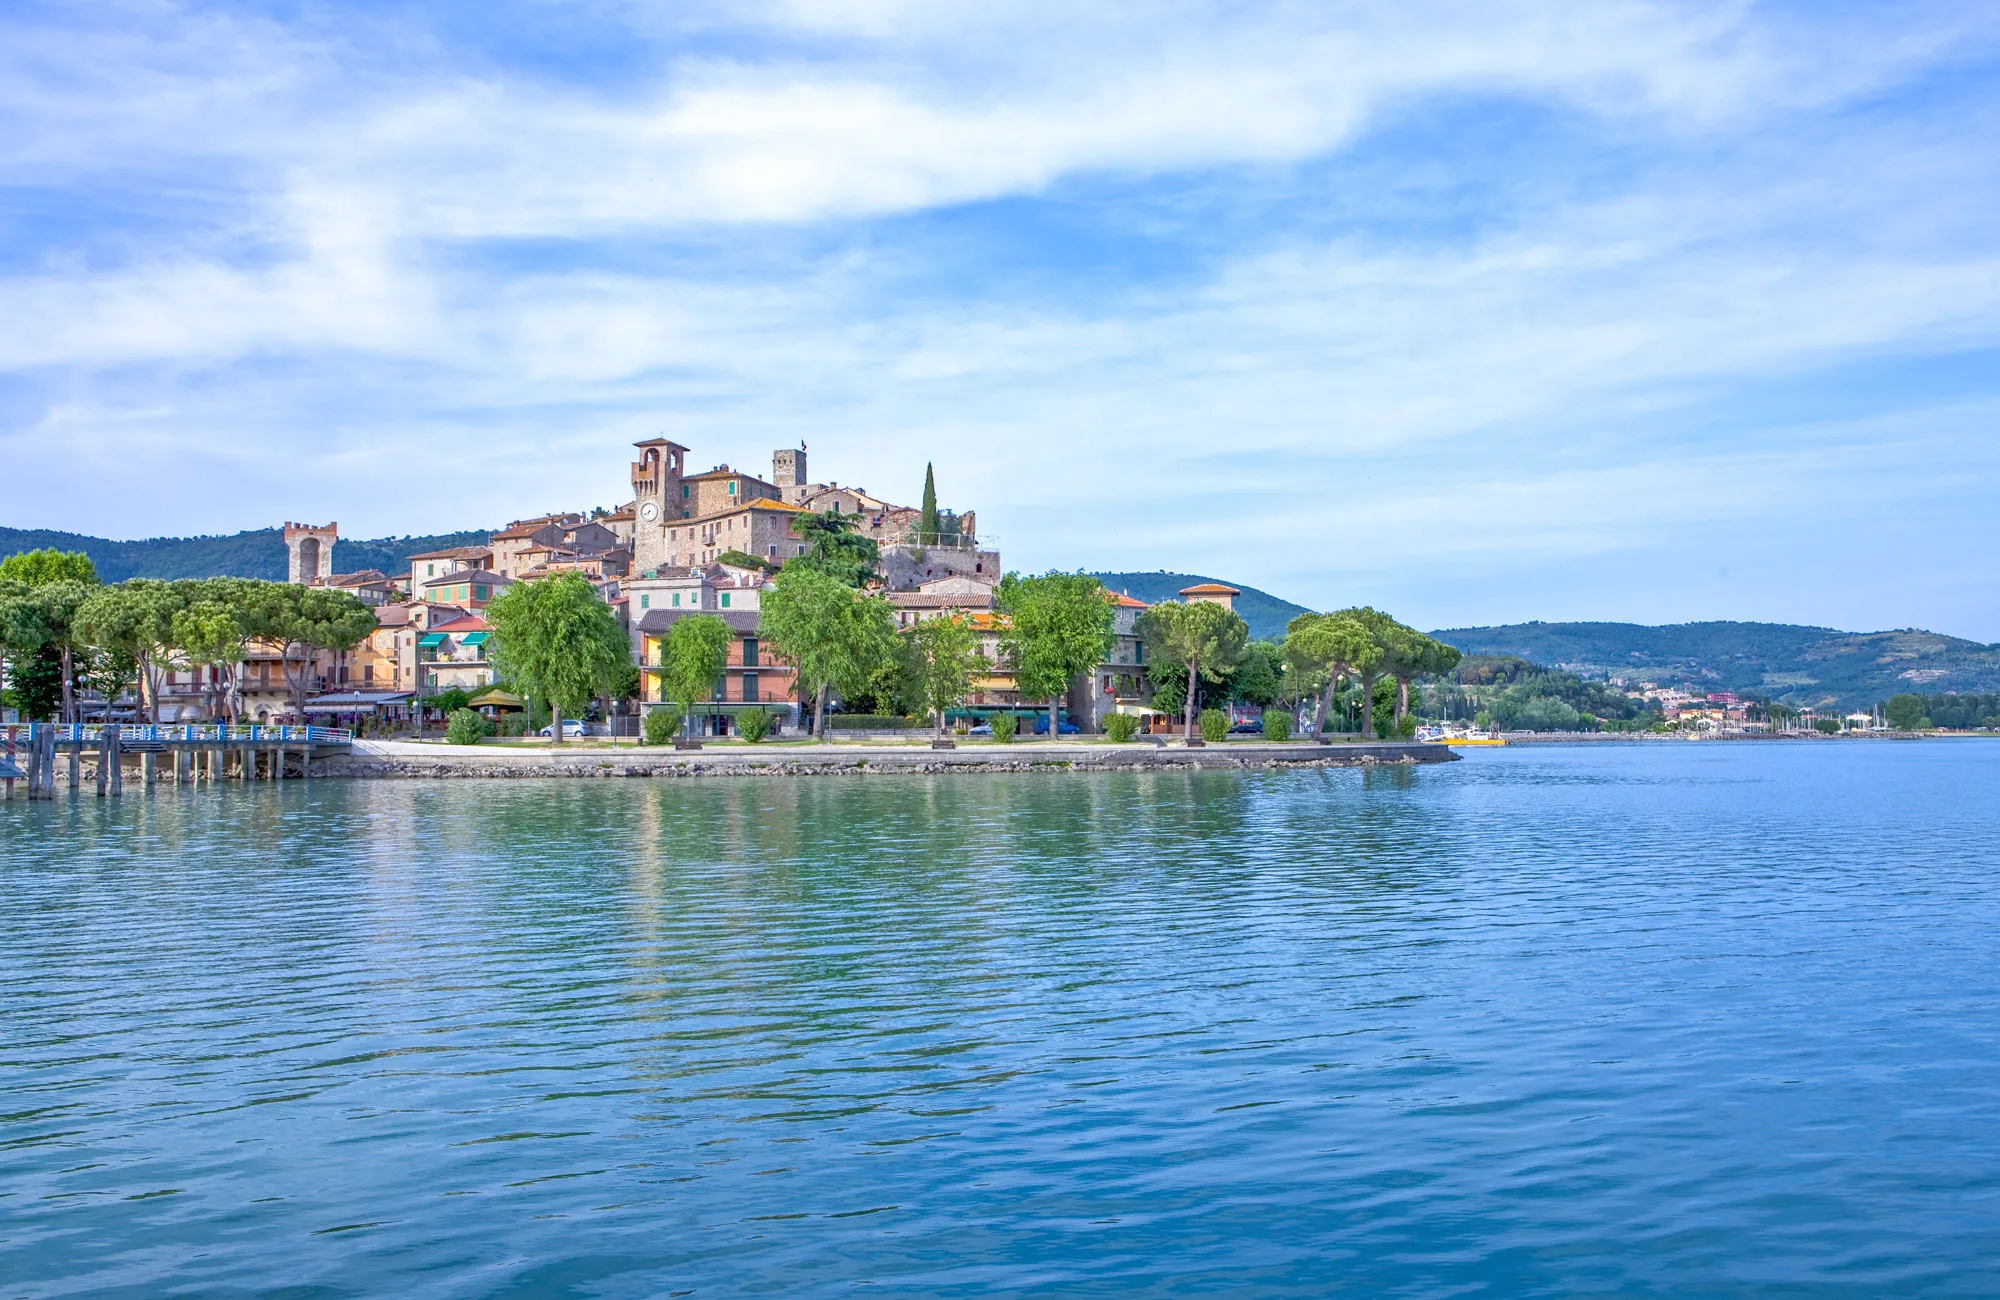 Lake Trasimeno in Italy, Europe | Lakes - Rated 3.3